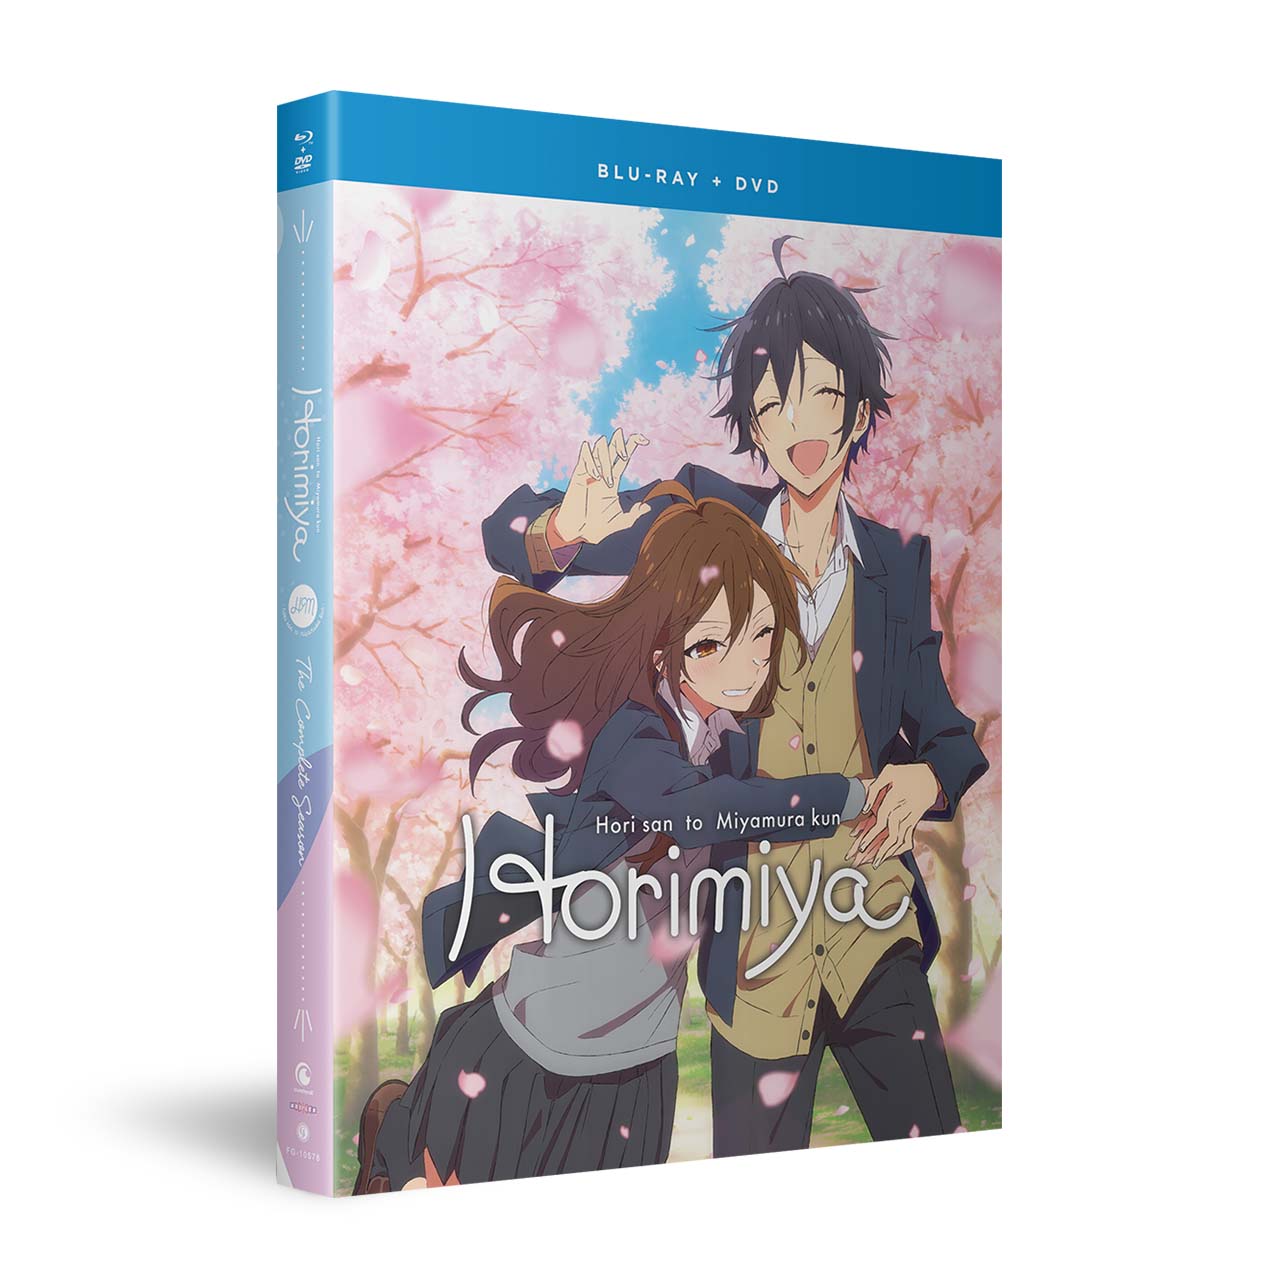 Horimiya - The Complete Season - BD/DVD image count 2